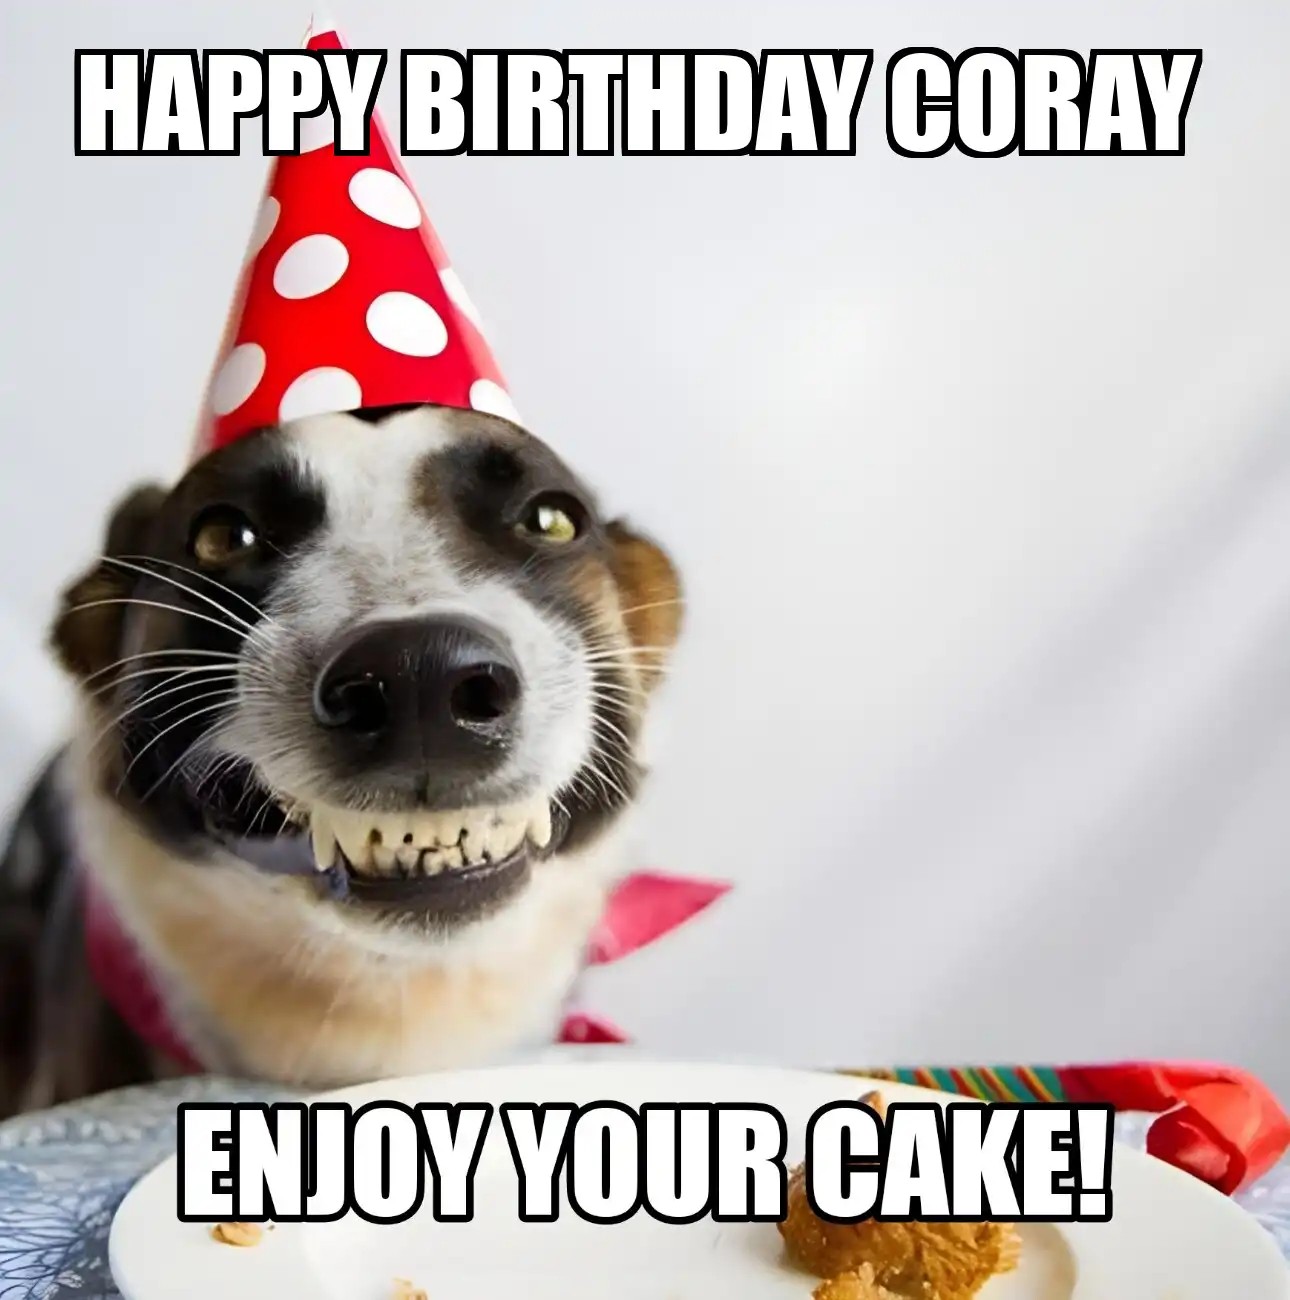 Happy Birthday Coray Enjoy Your Cake Dog Meme